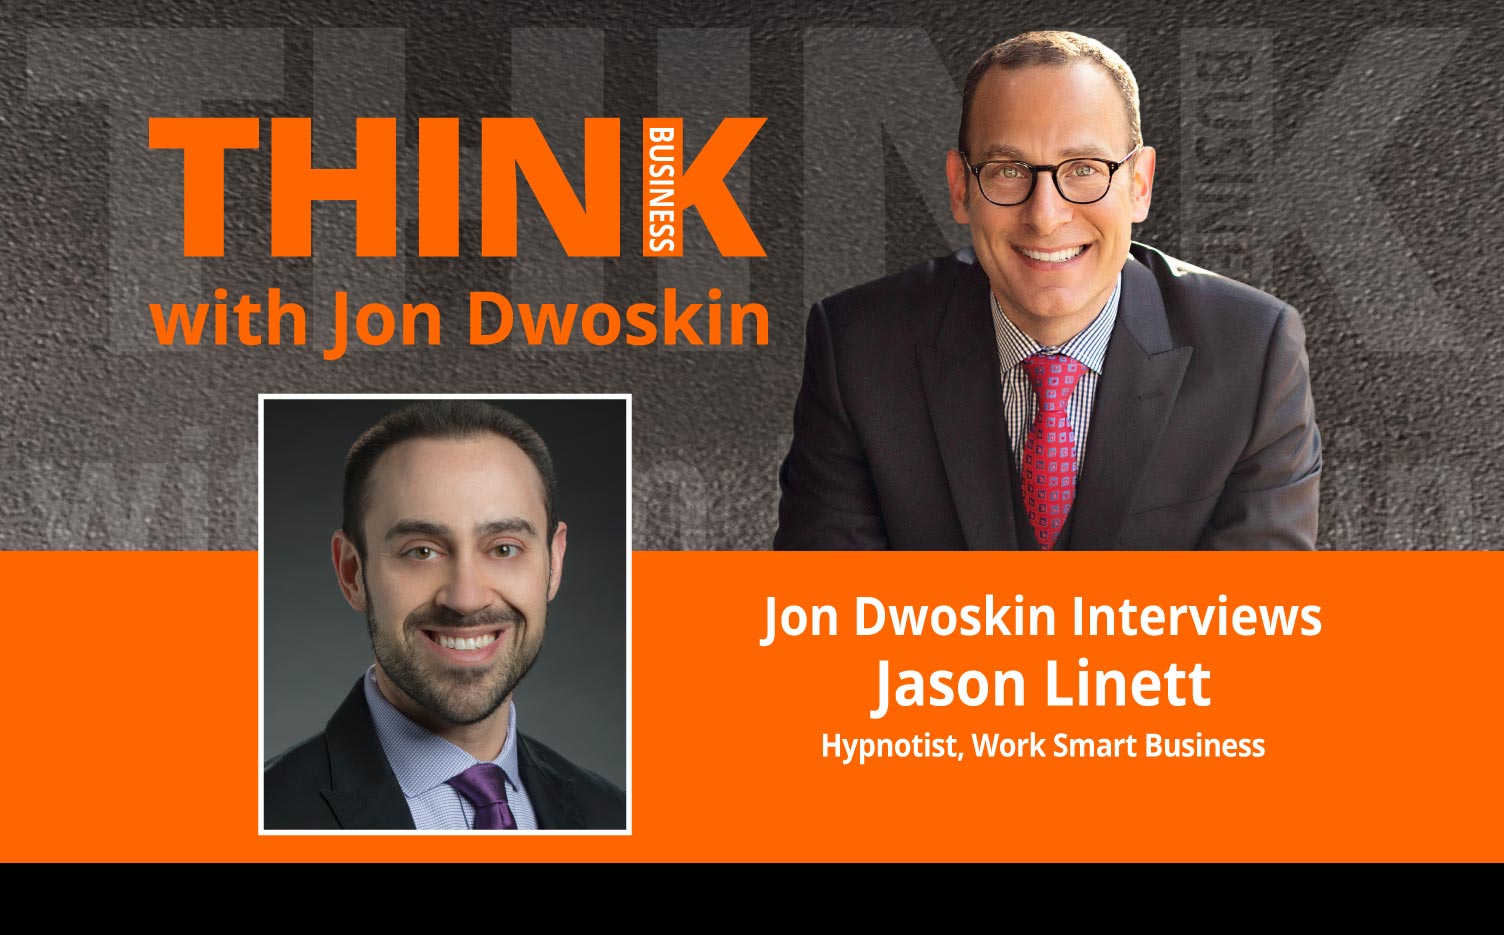 THINK Business Podcast: Jon Dwoskin Interviews Jason Linett, Hypnotist, Work Smart Business